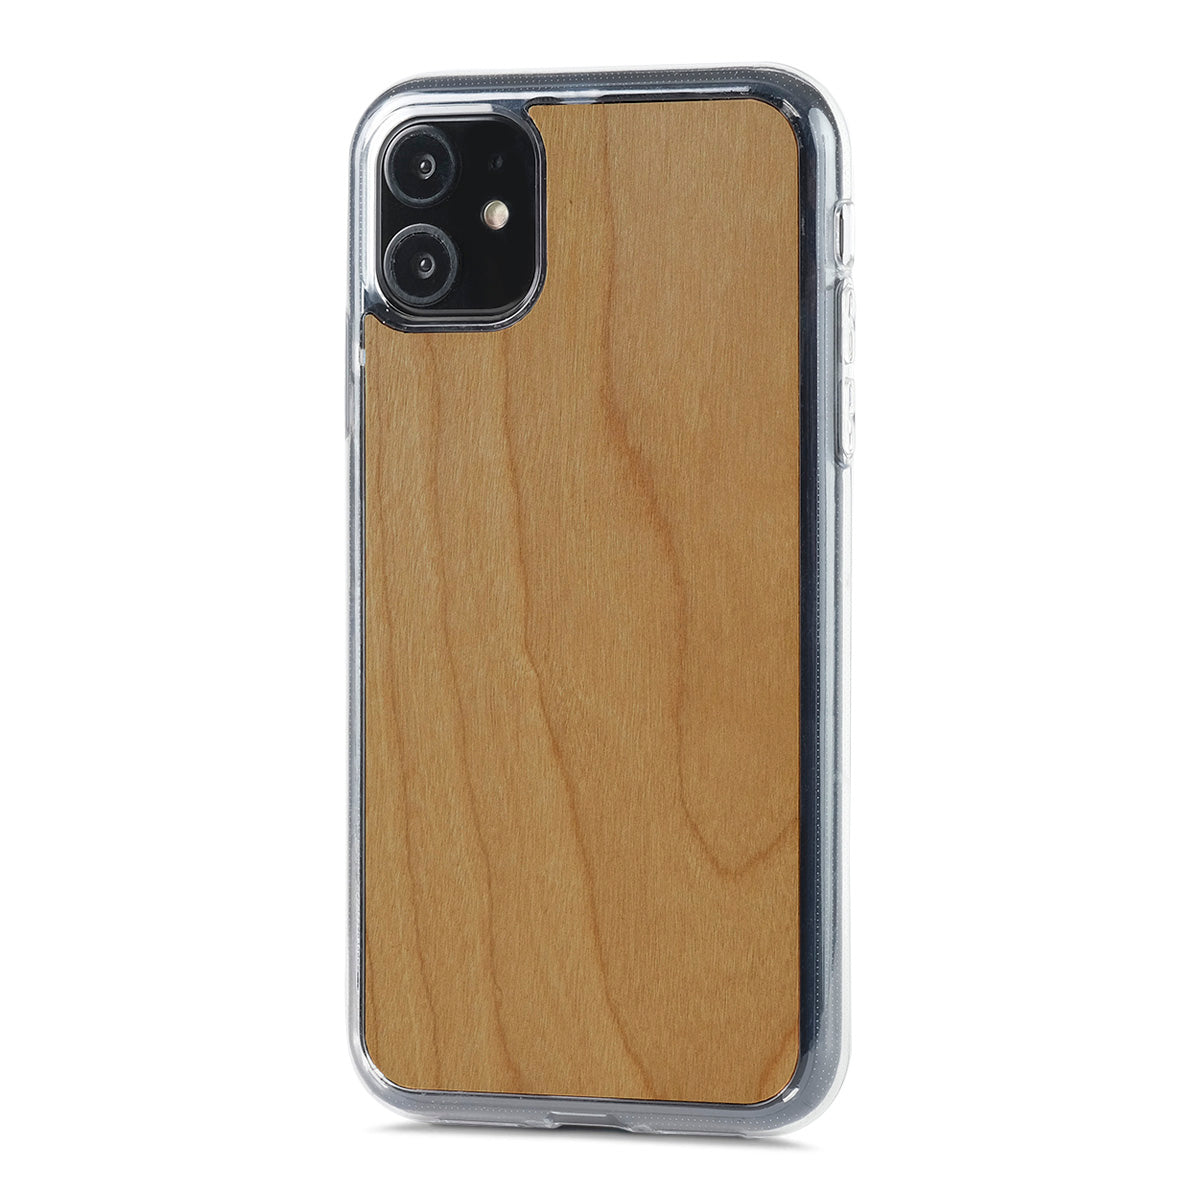 iPhone 11 —  #WoodBack Explorer Clear Case